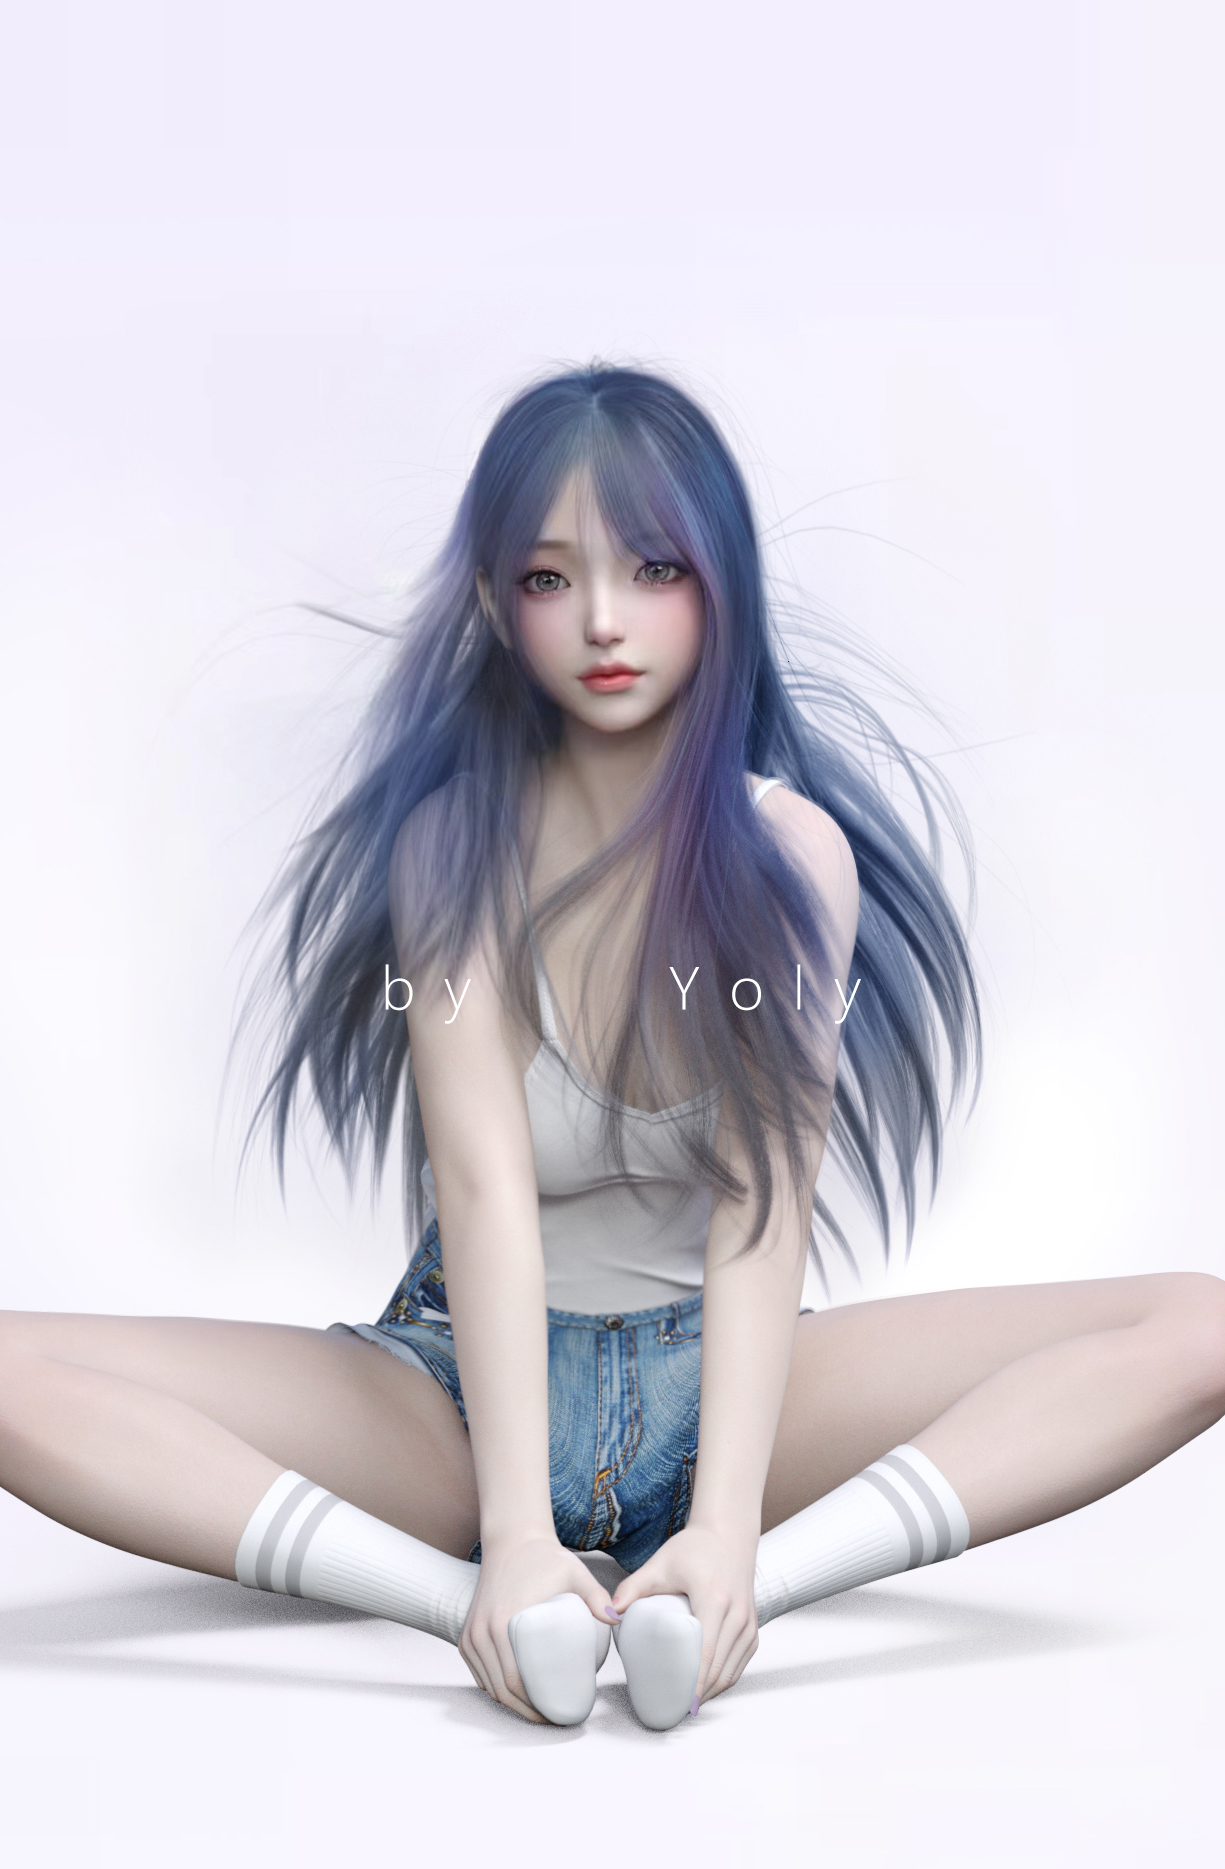 3D CG Fantasy Girl Long Hair Yoly 1225x1869